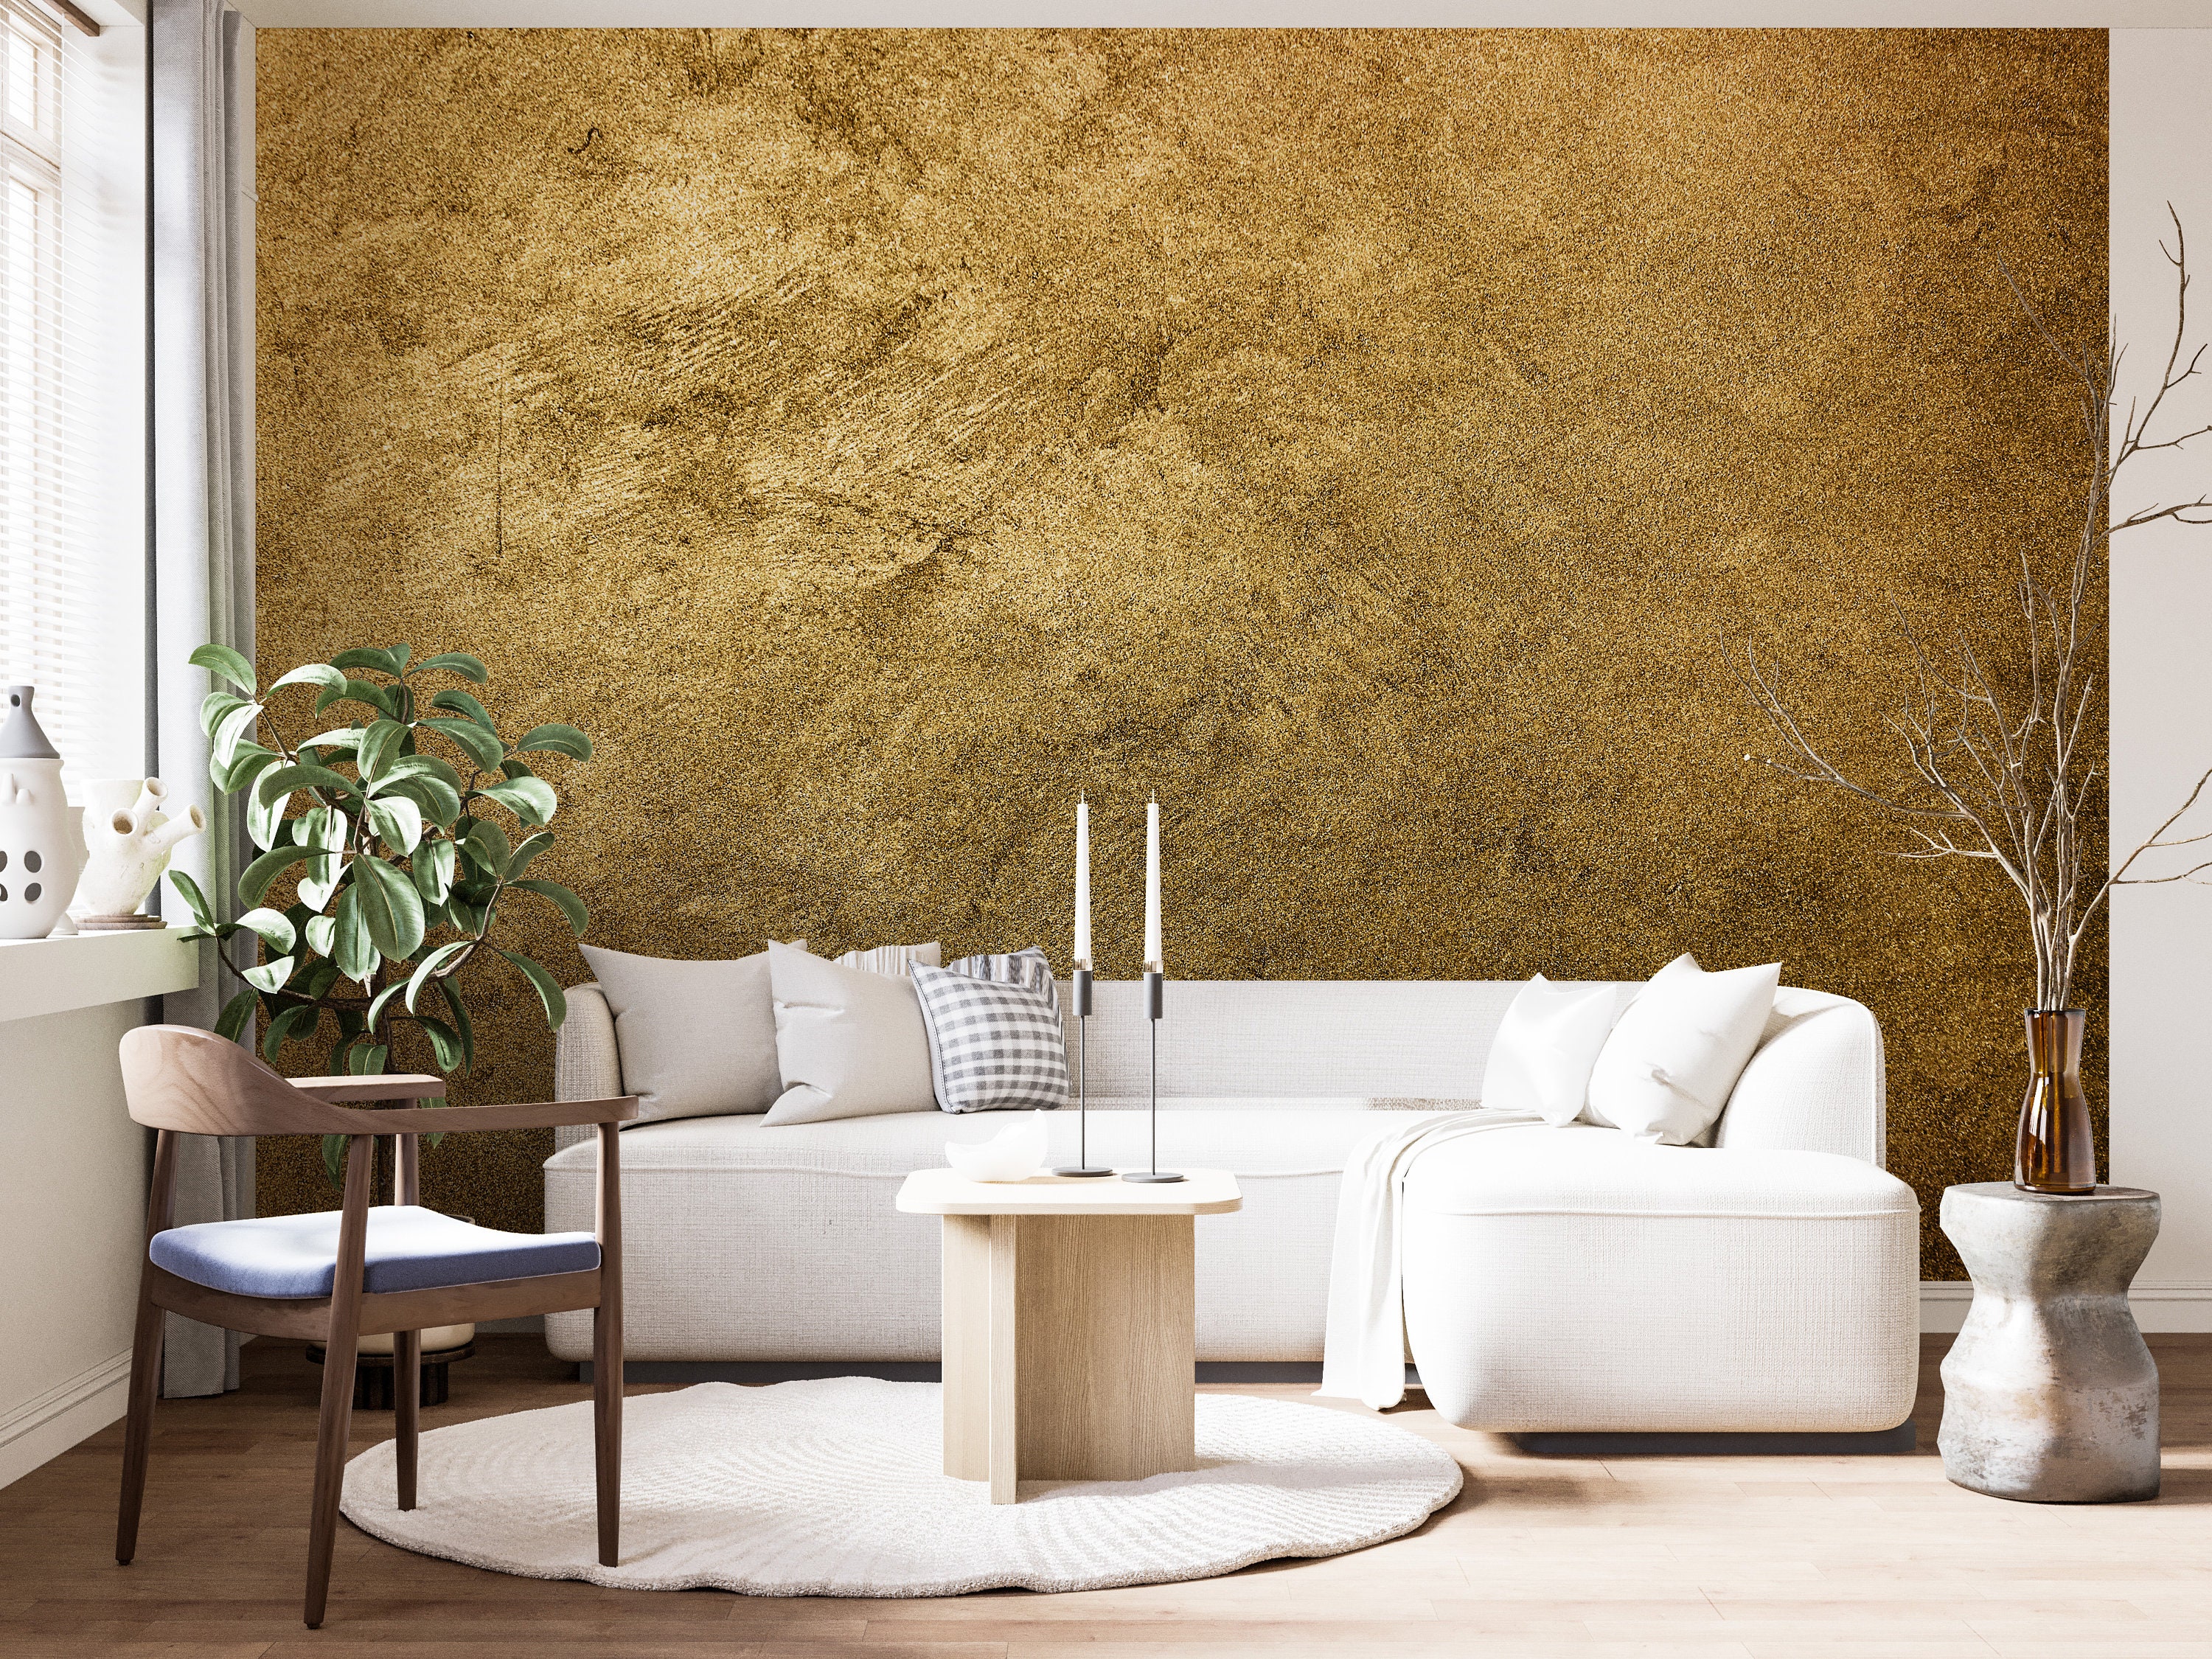 Tetsip Media Rose Gold Metallic Wallpaper Print on Non Adhesive Non Woven  Wallpaper W36H24 Inches 6sqft  Metallic Wallpaper  Amazonin Home  Improvement